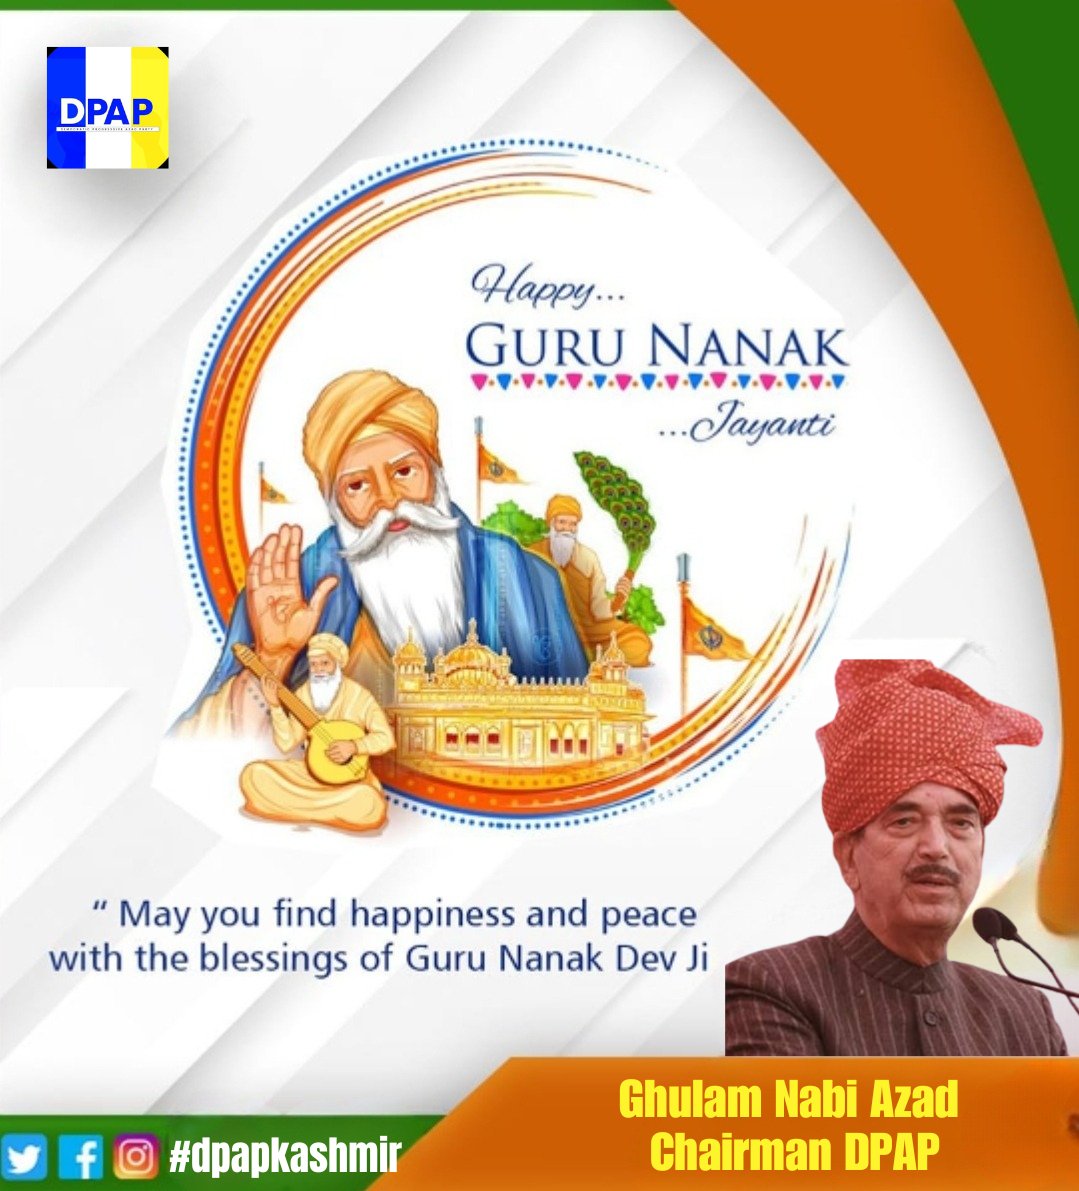 Happy Guru Nanak Jayanti. #festivals #gurunanakjayanti #JammuAndKashmir #celebration #dpapkashmir #GhulamNabiAzad